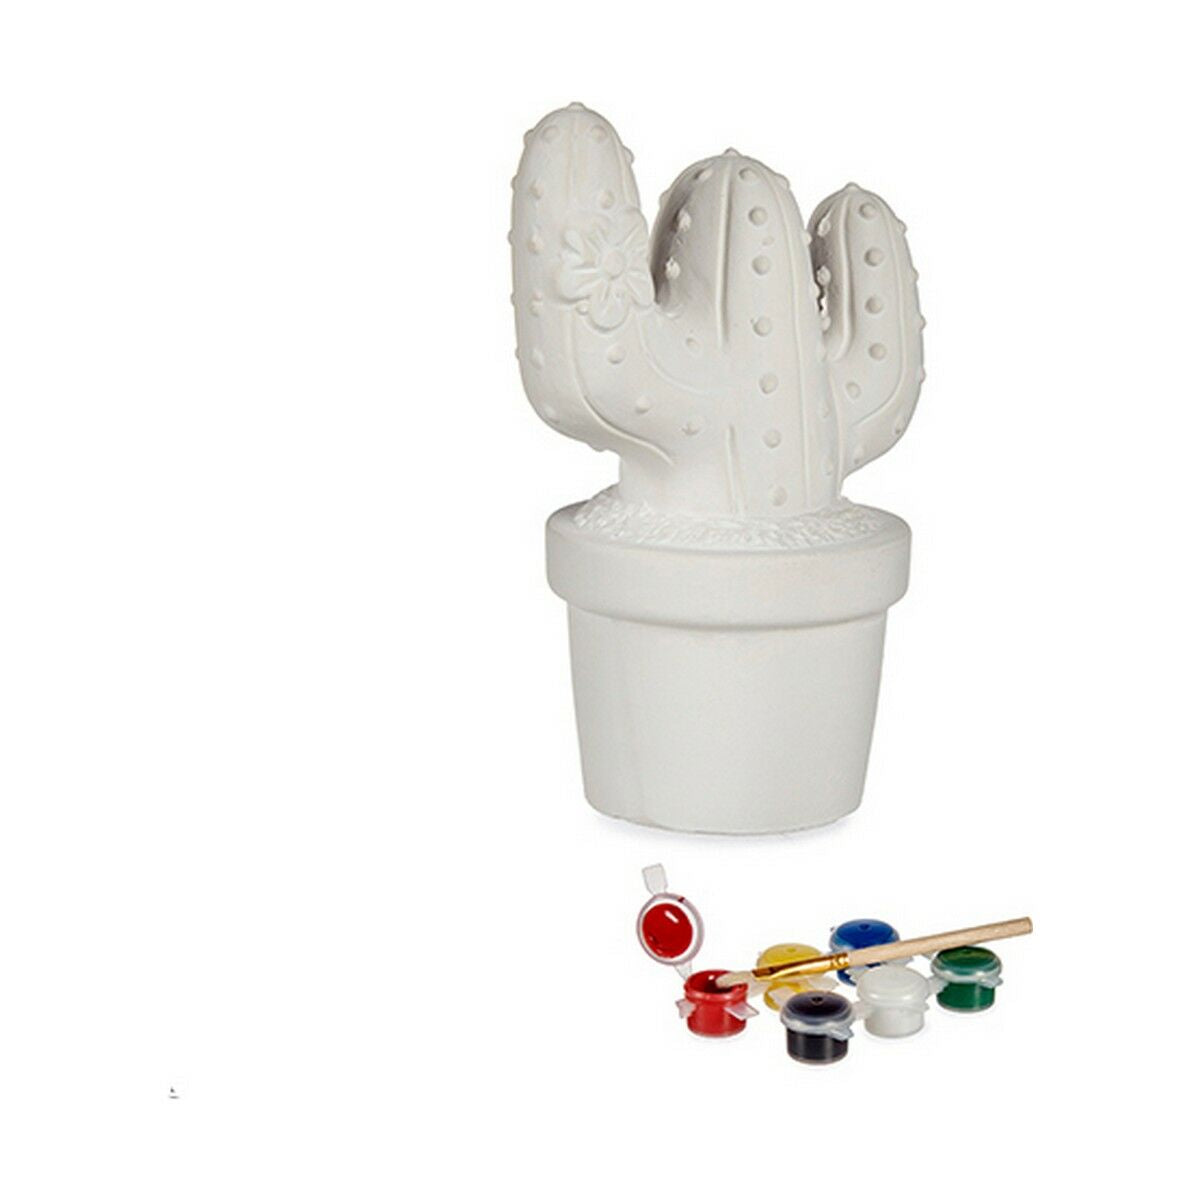 Paint Your Own Money Box Cactus 8,5 x 16,5 x 11,5 cm Ceramic (12 Units)